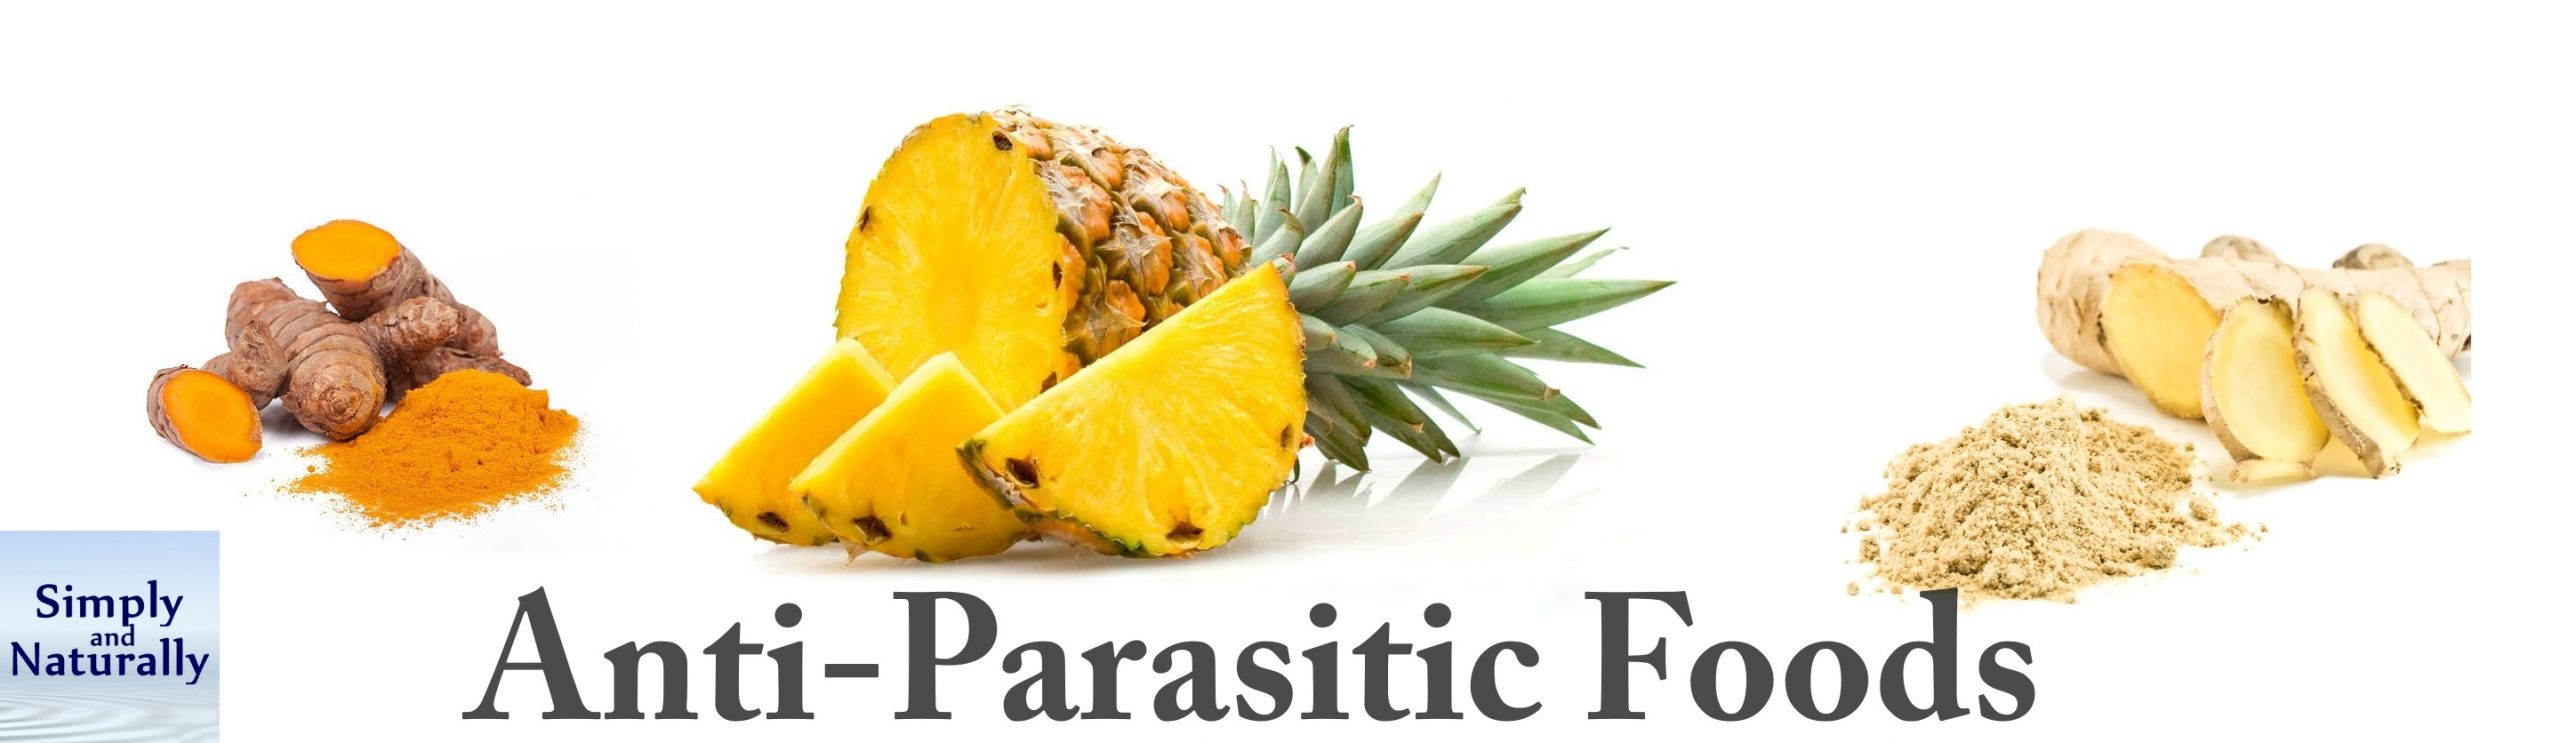 Anti-parasitic foods